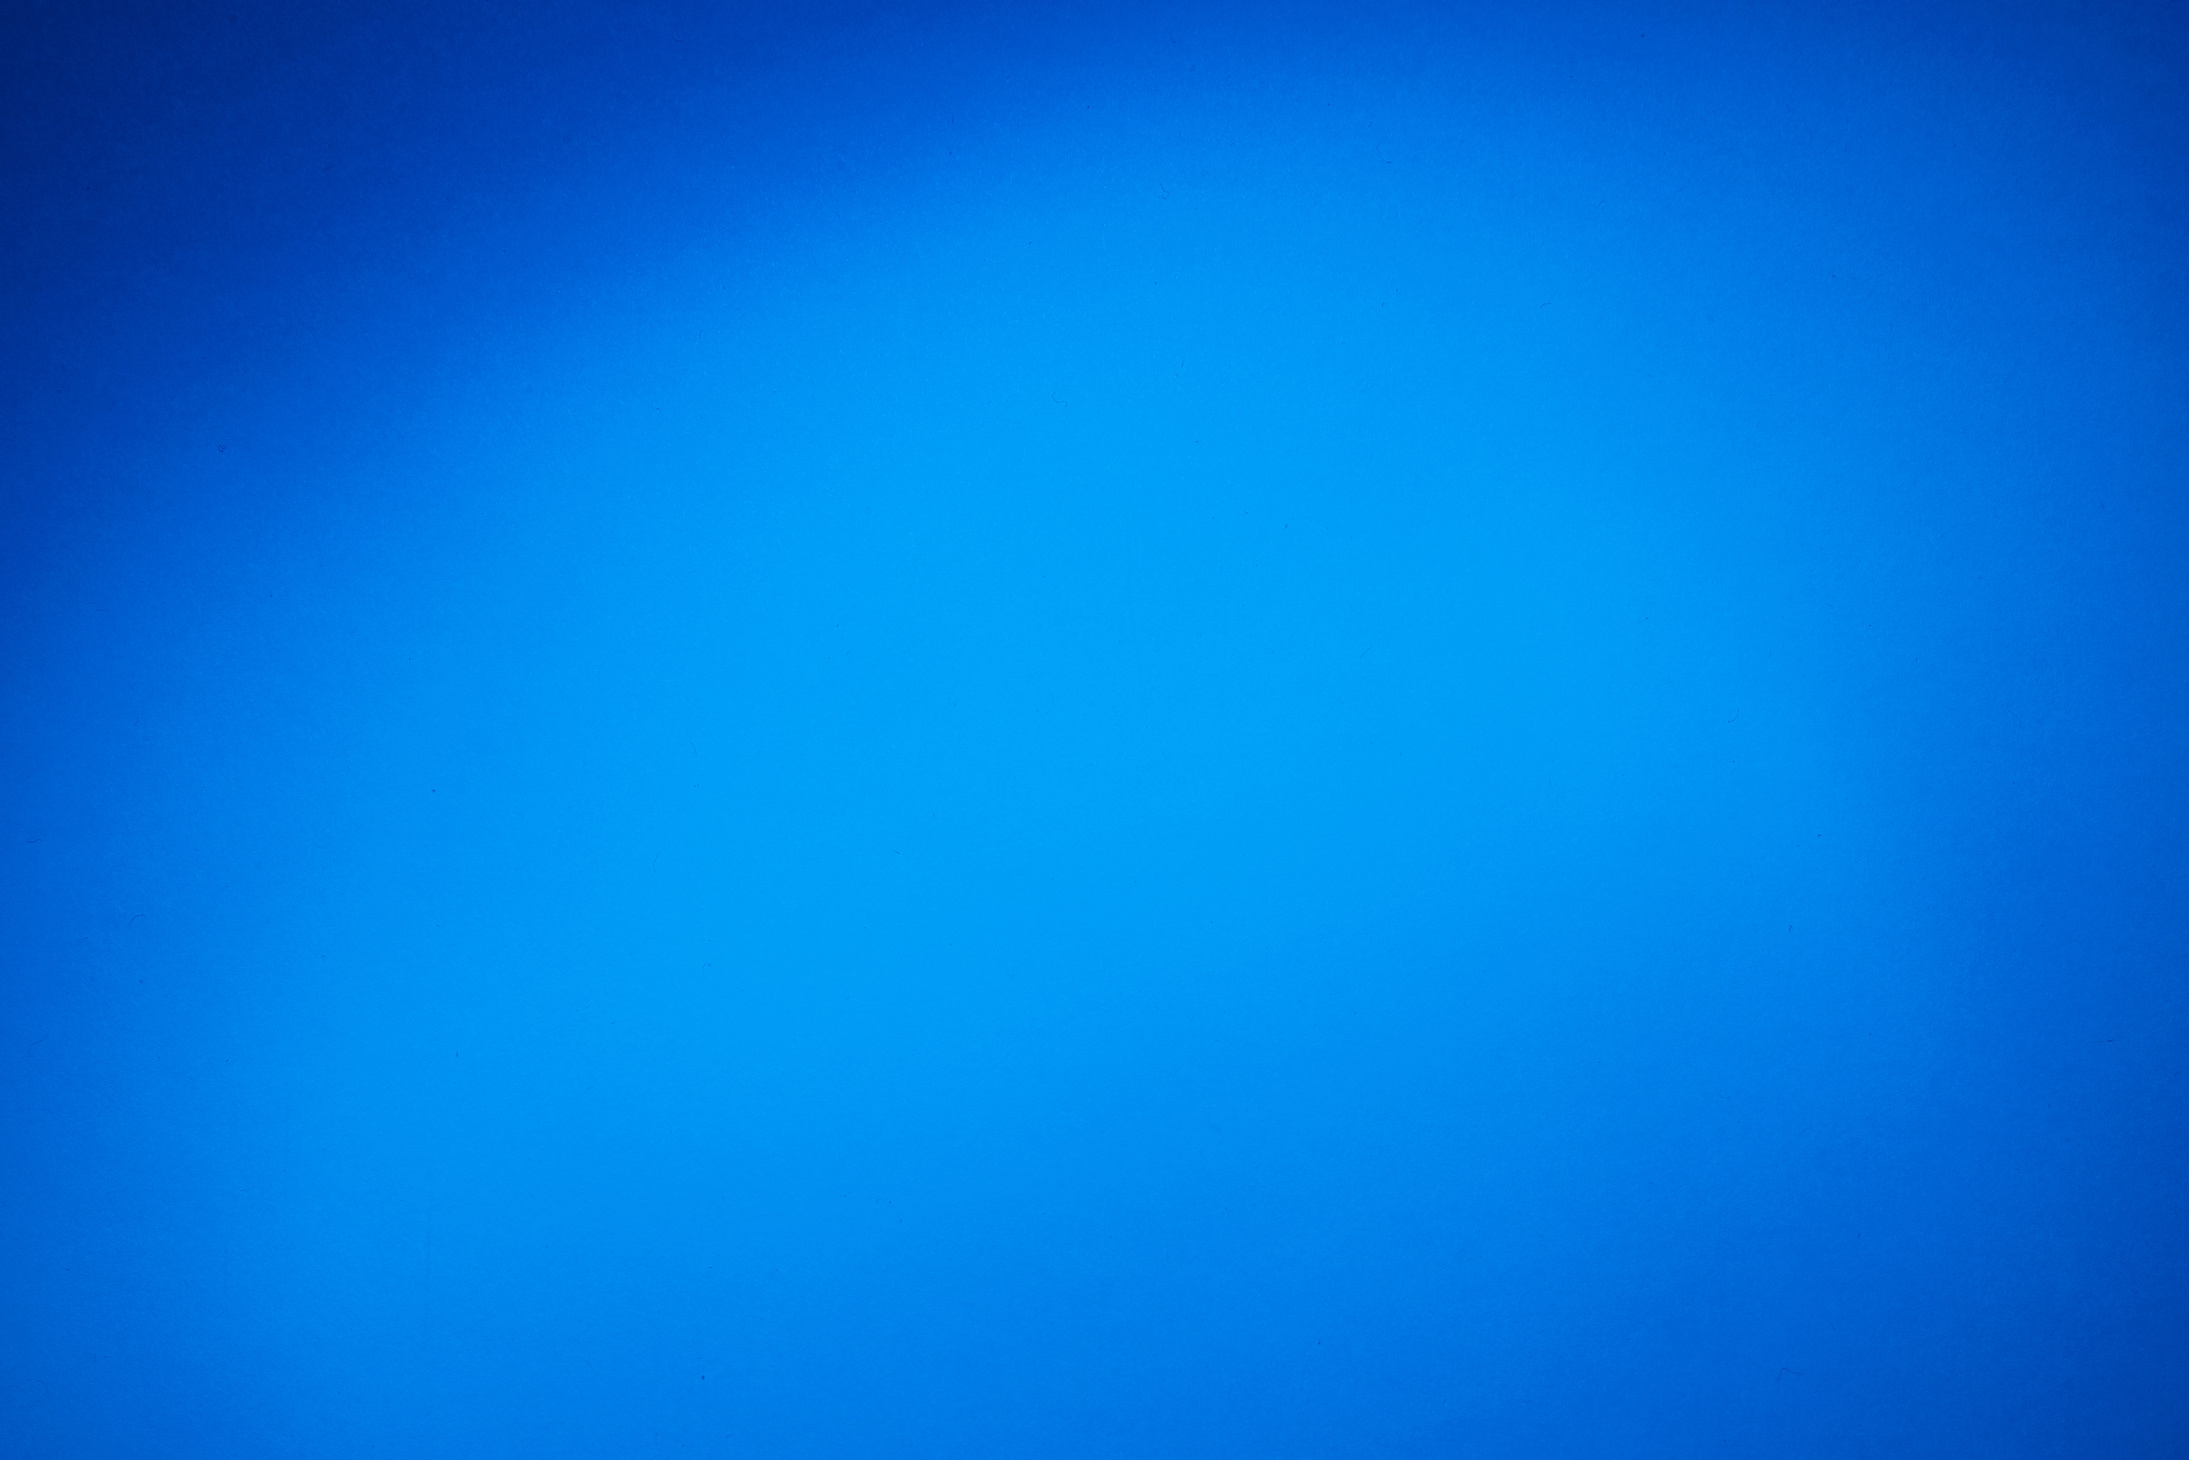 Gradient textural light blue background